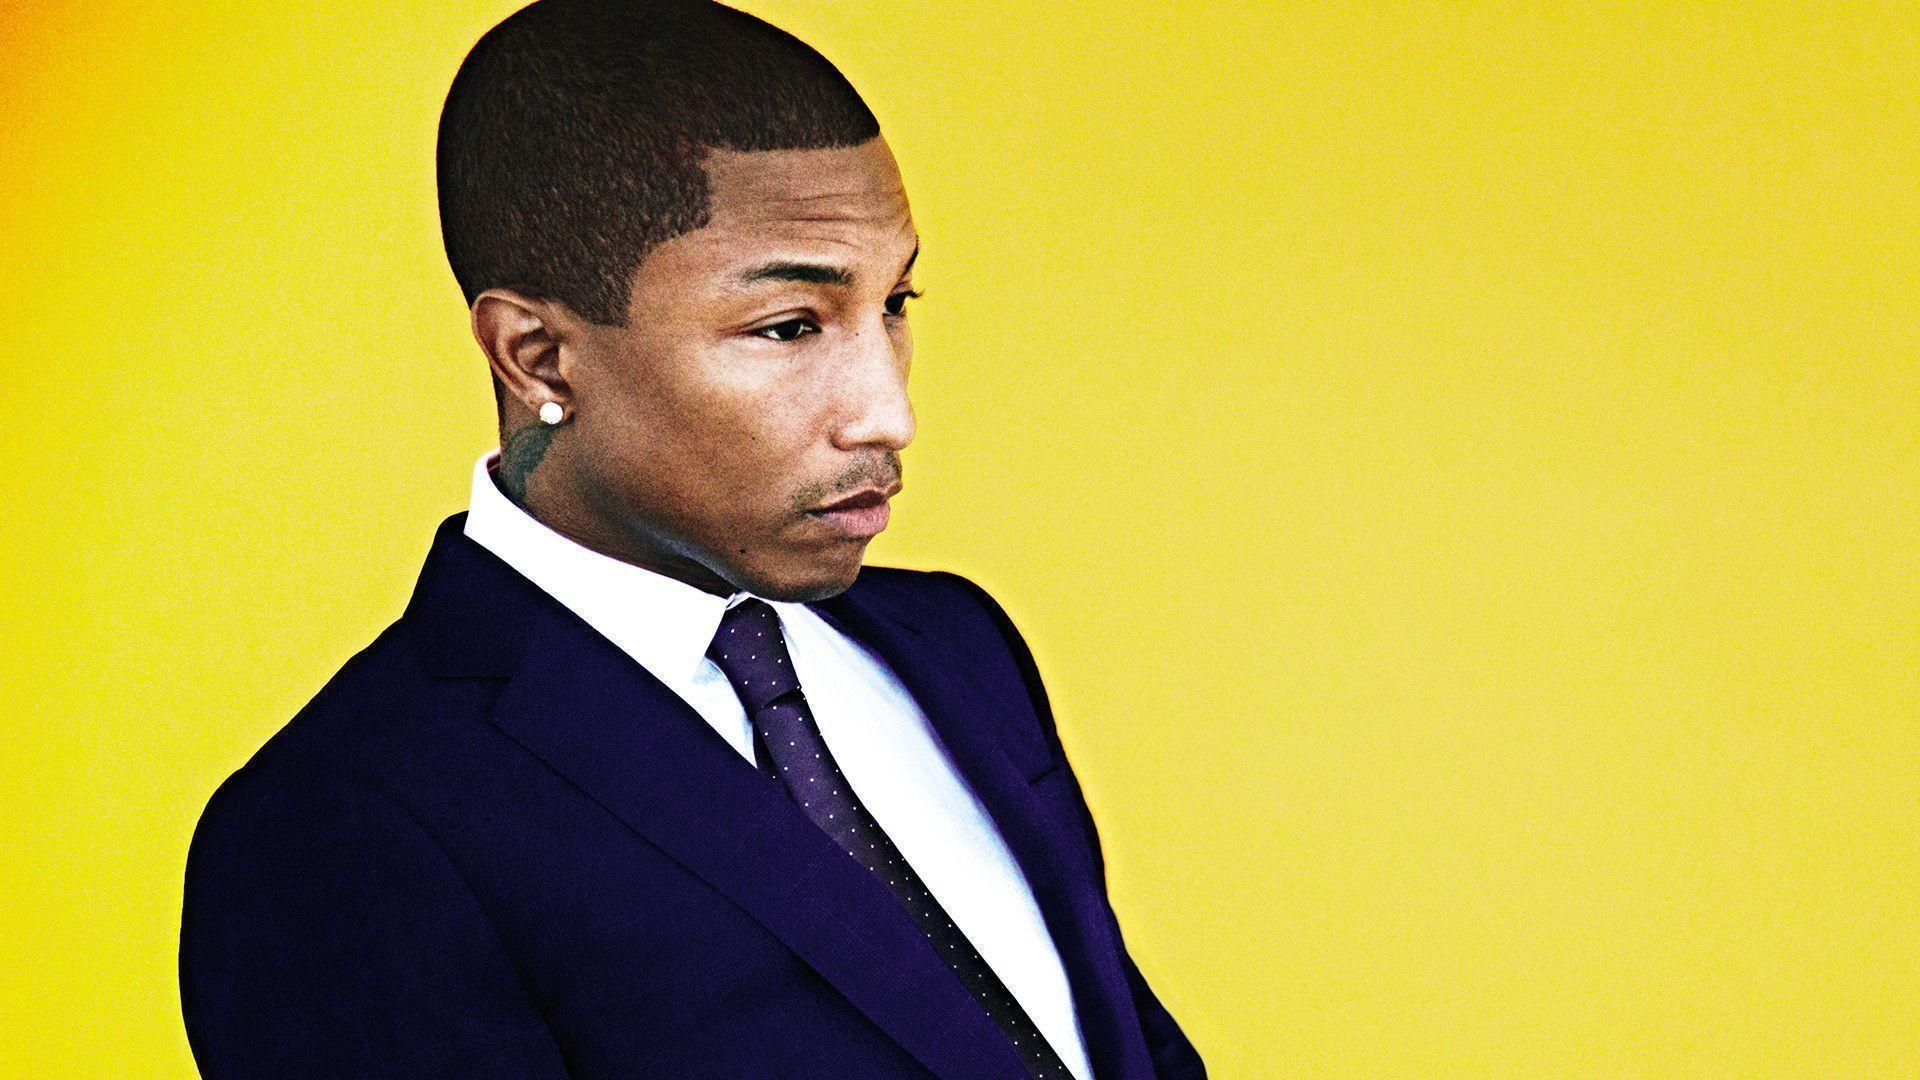 Pharrell Williams Wallpaper & Picture